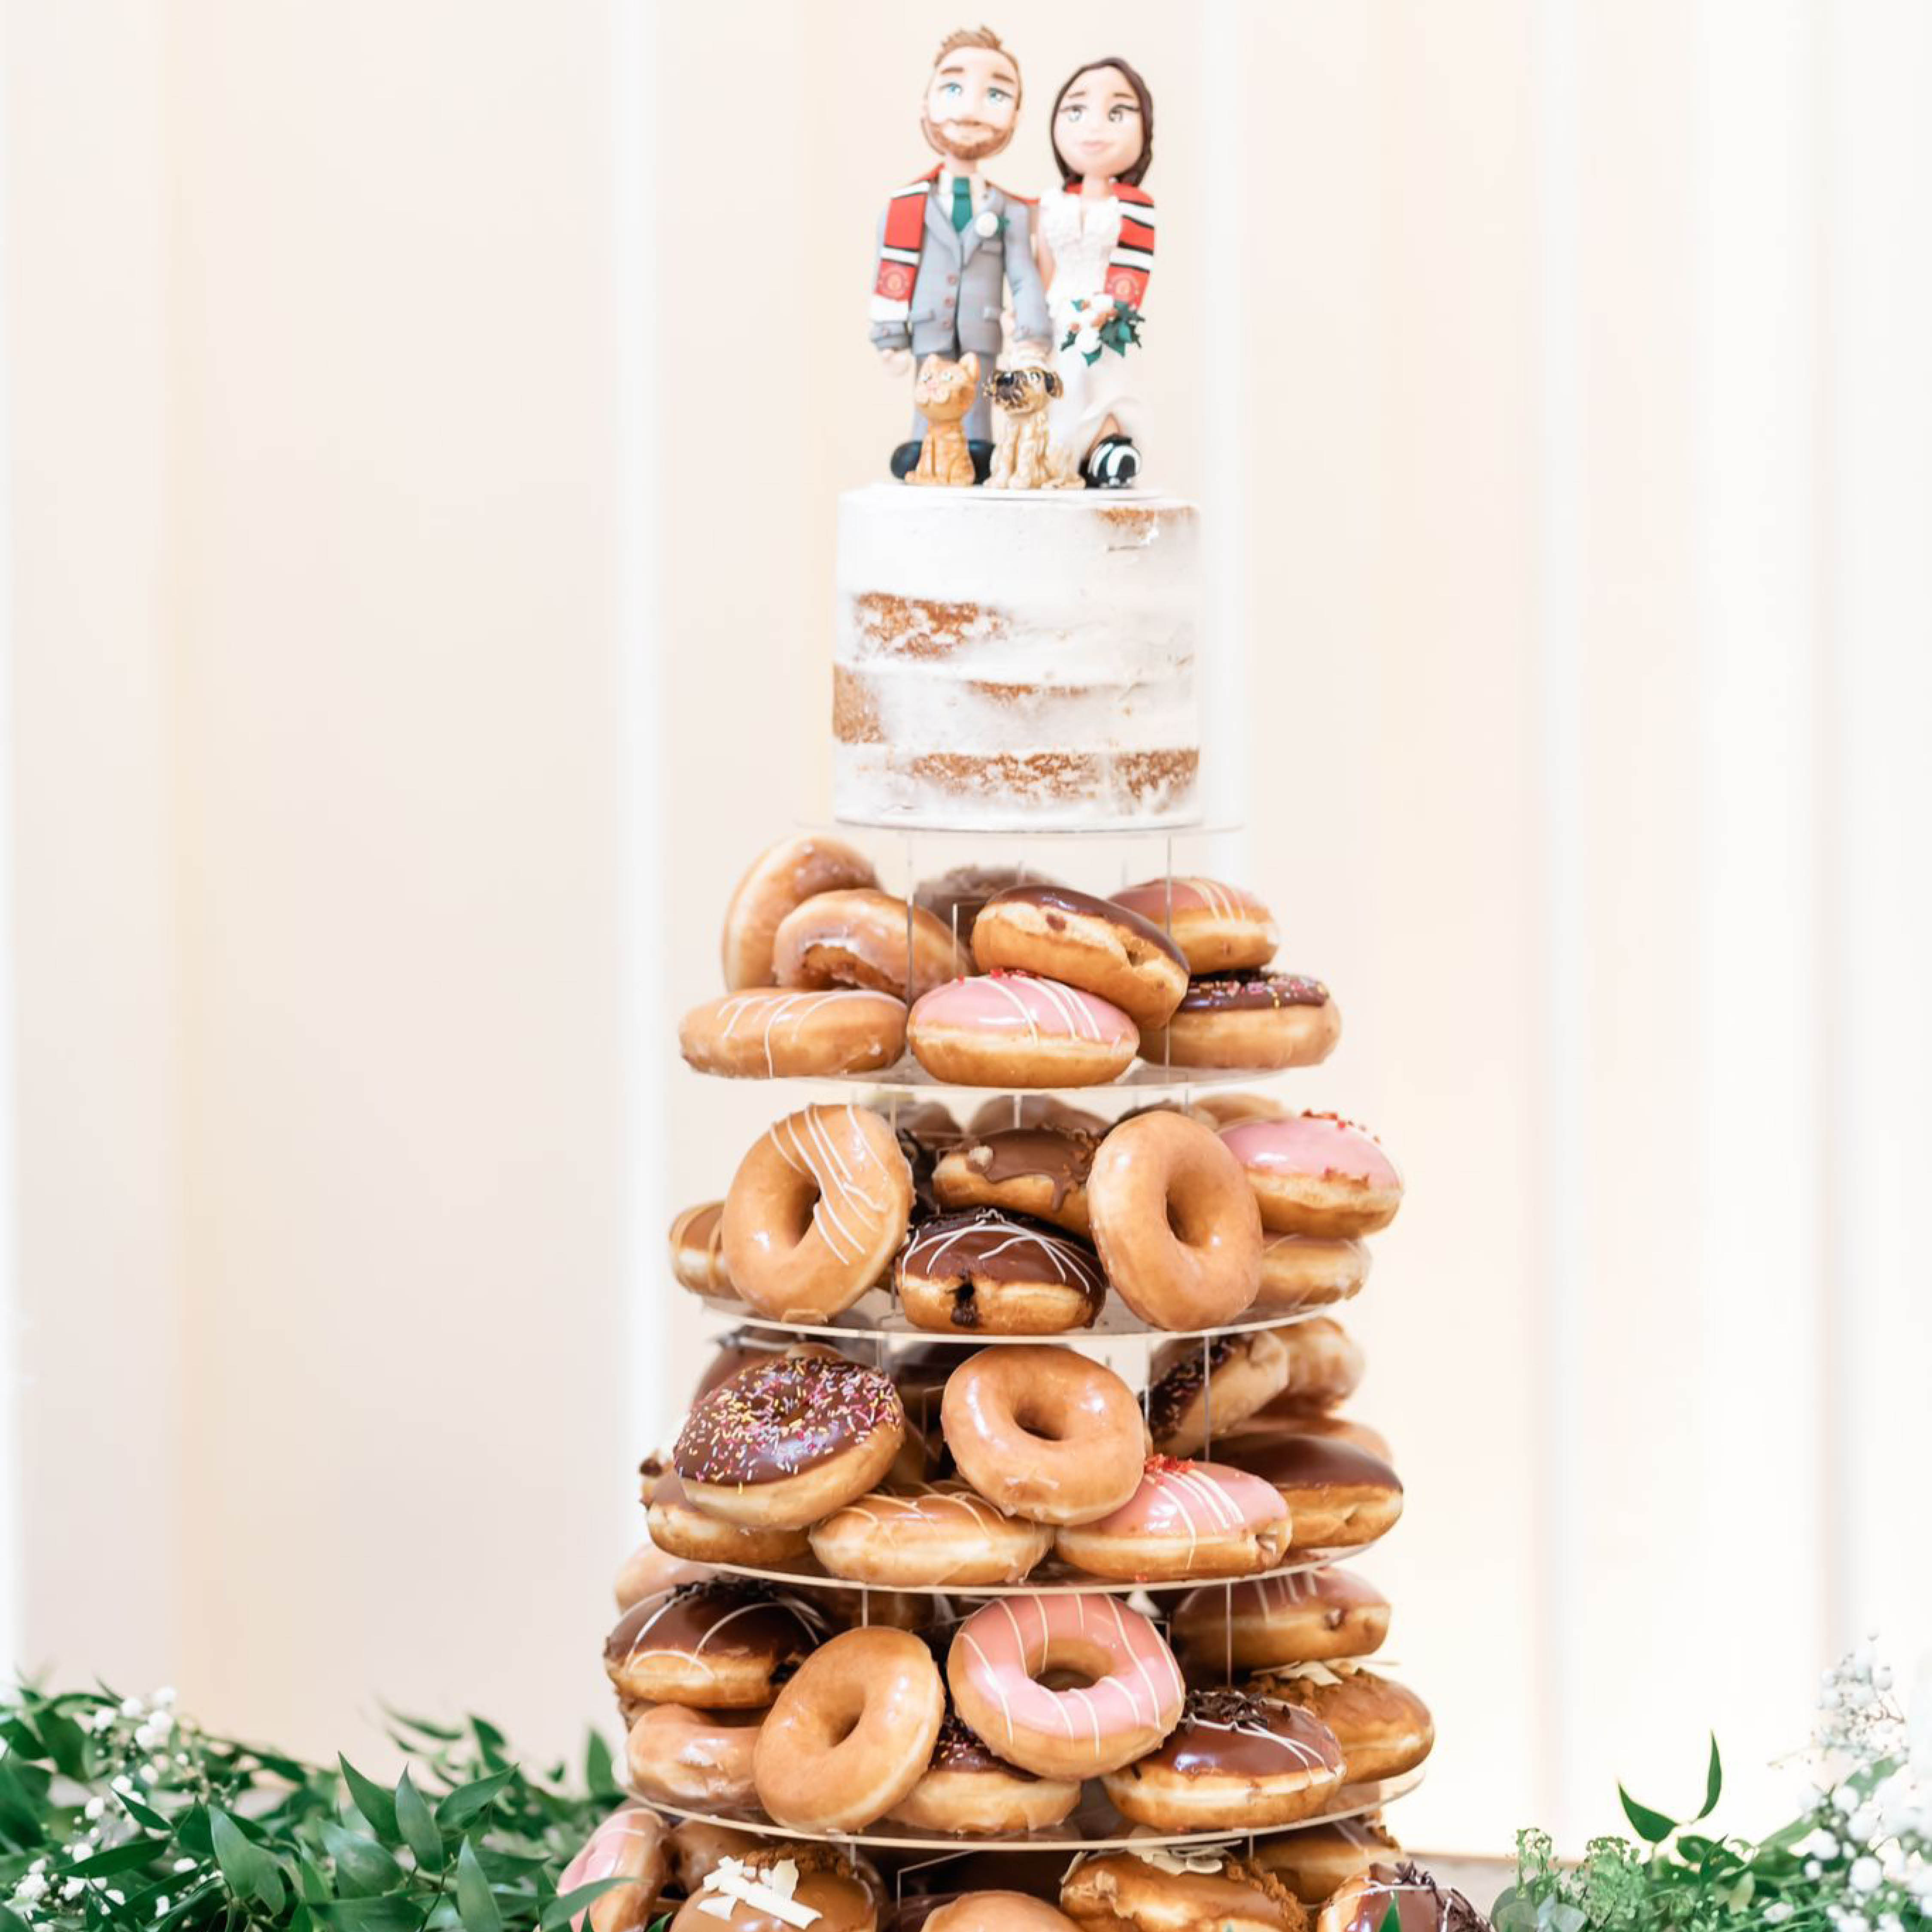 Millbridge court real weddings, doughnut tower, personalised cake topper